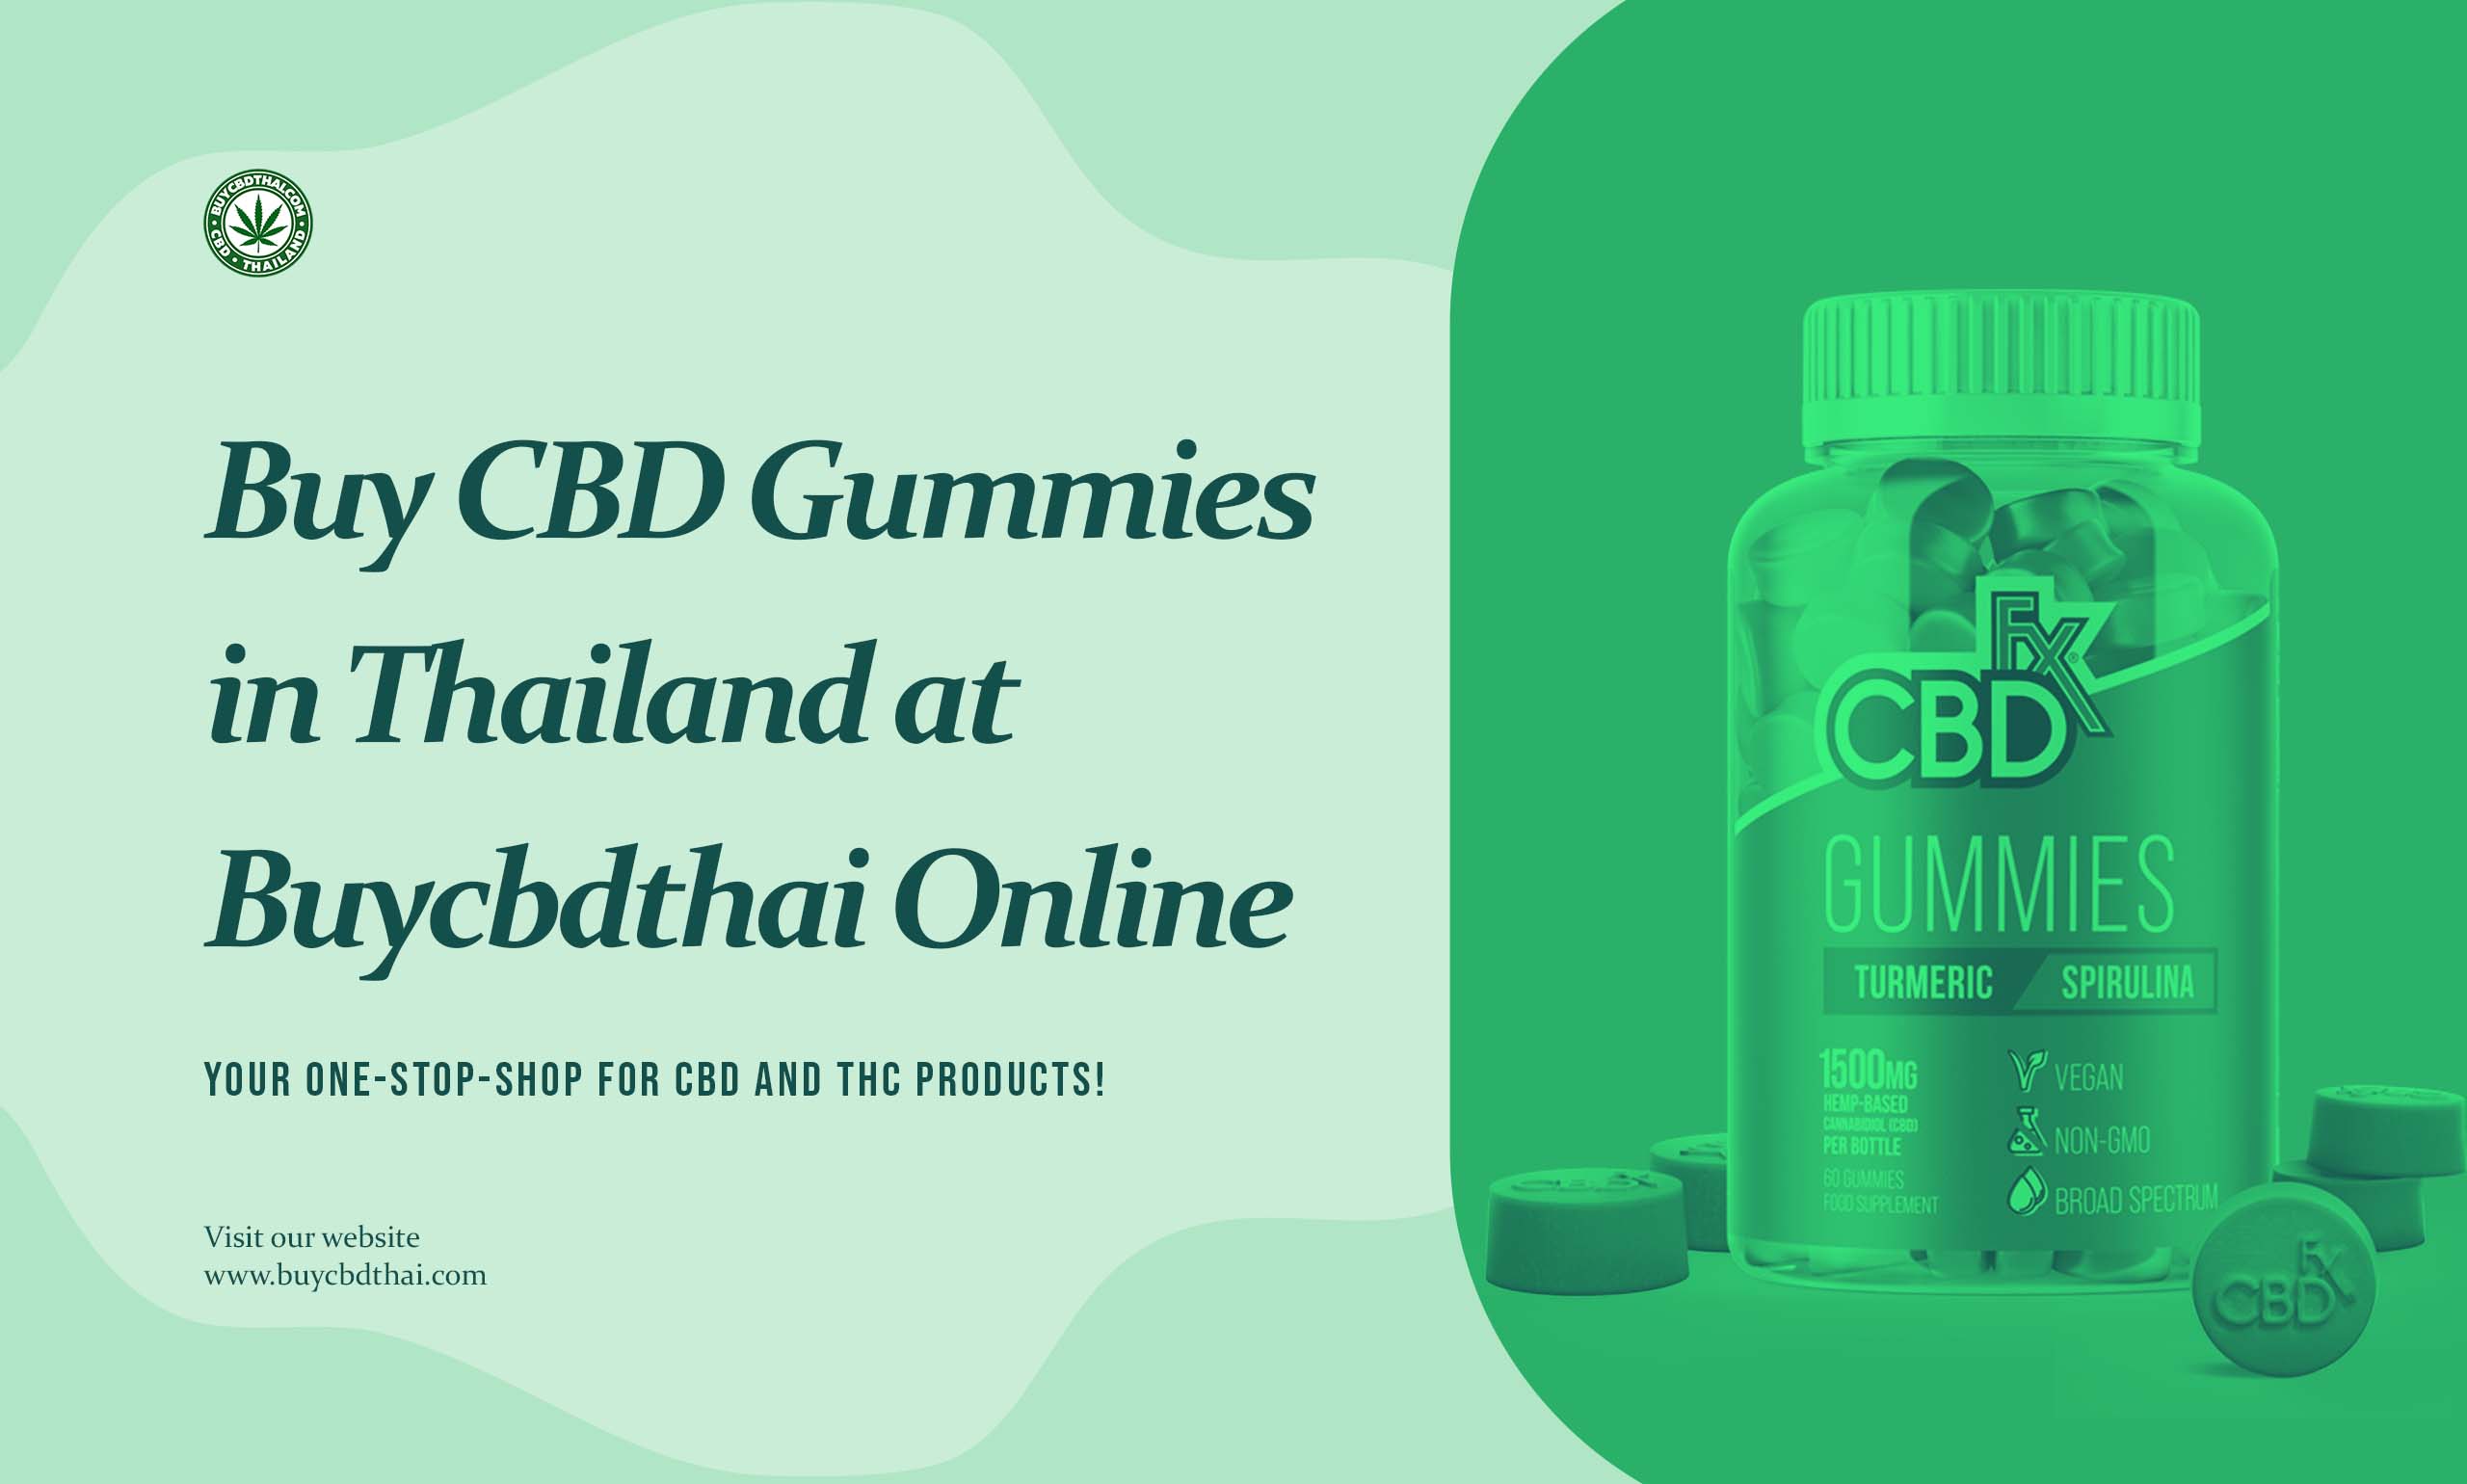 Buy CBD Gummies in Thailand at Buycbdthai's Online Shop